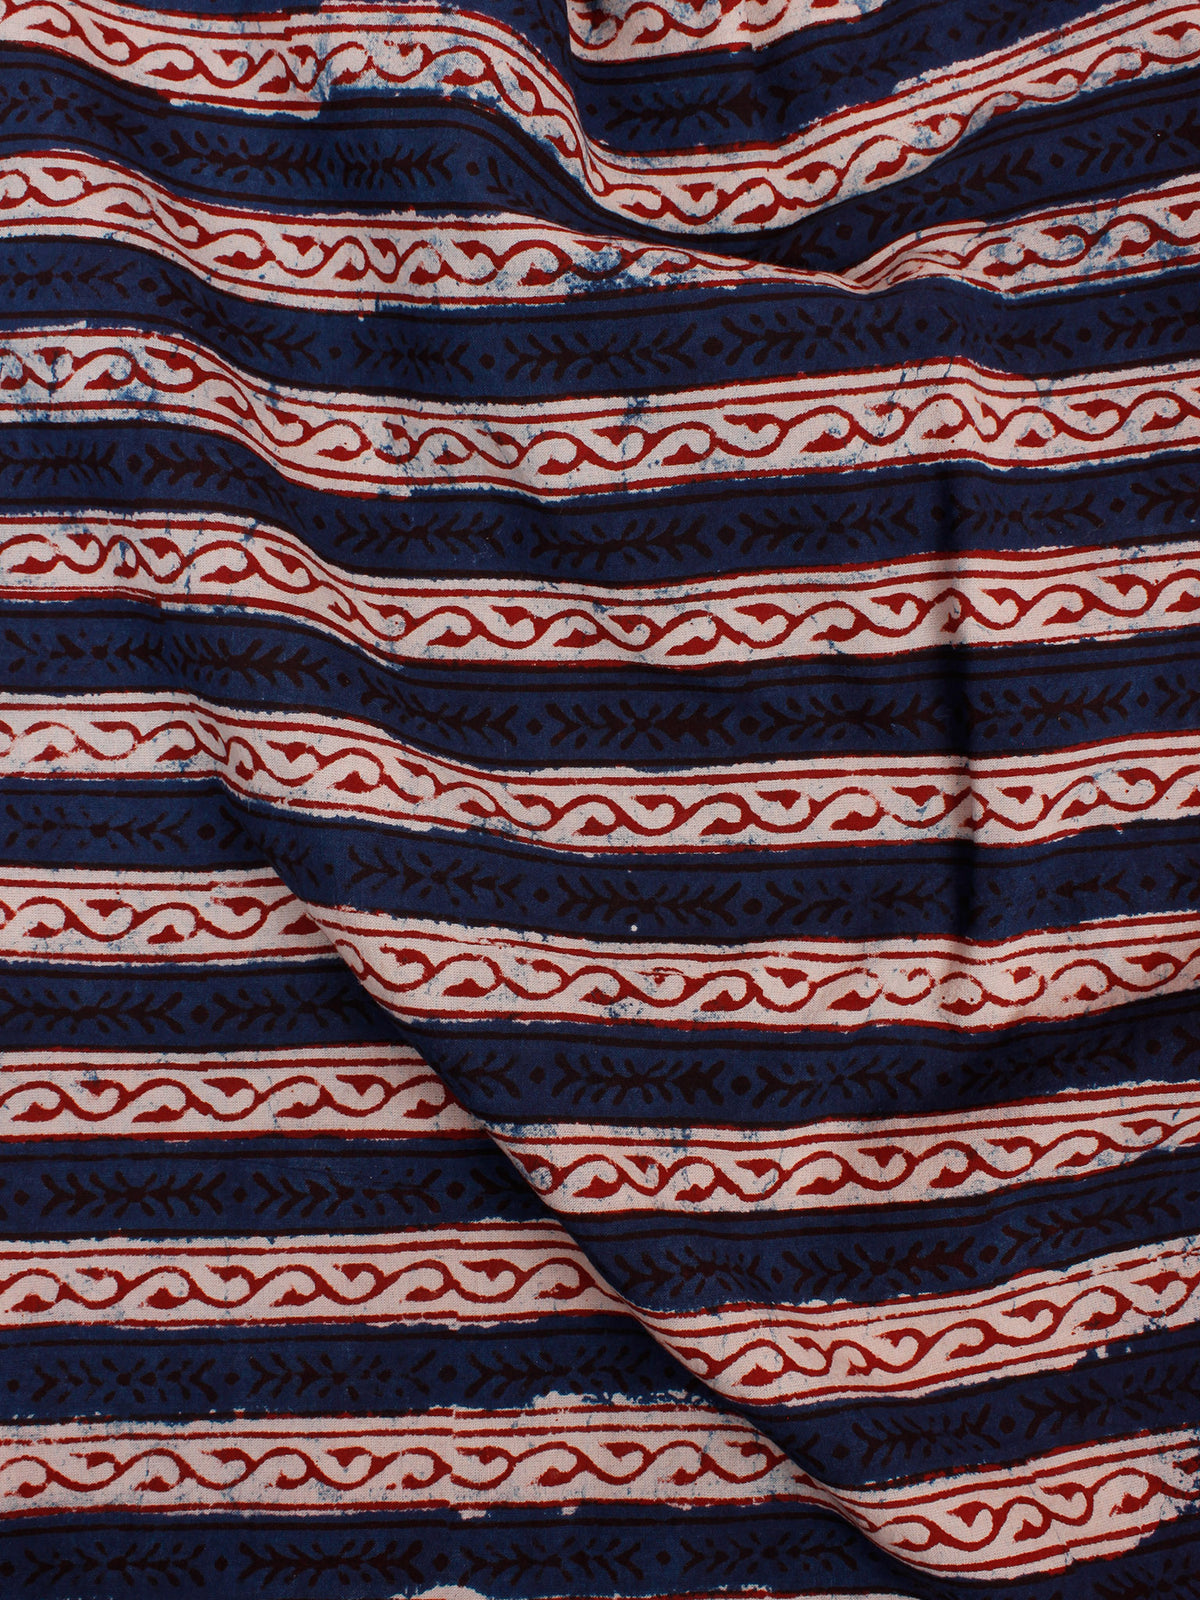 Blue Maroon Black Hand Block Printed Cotton Cambric Fabric Per Meter - F0916189